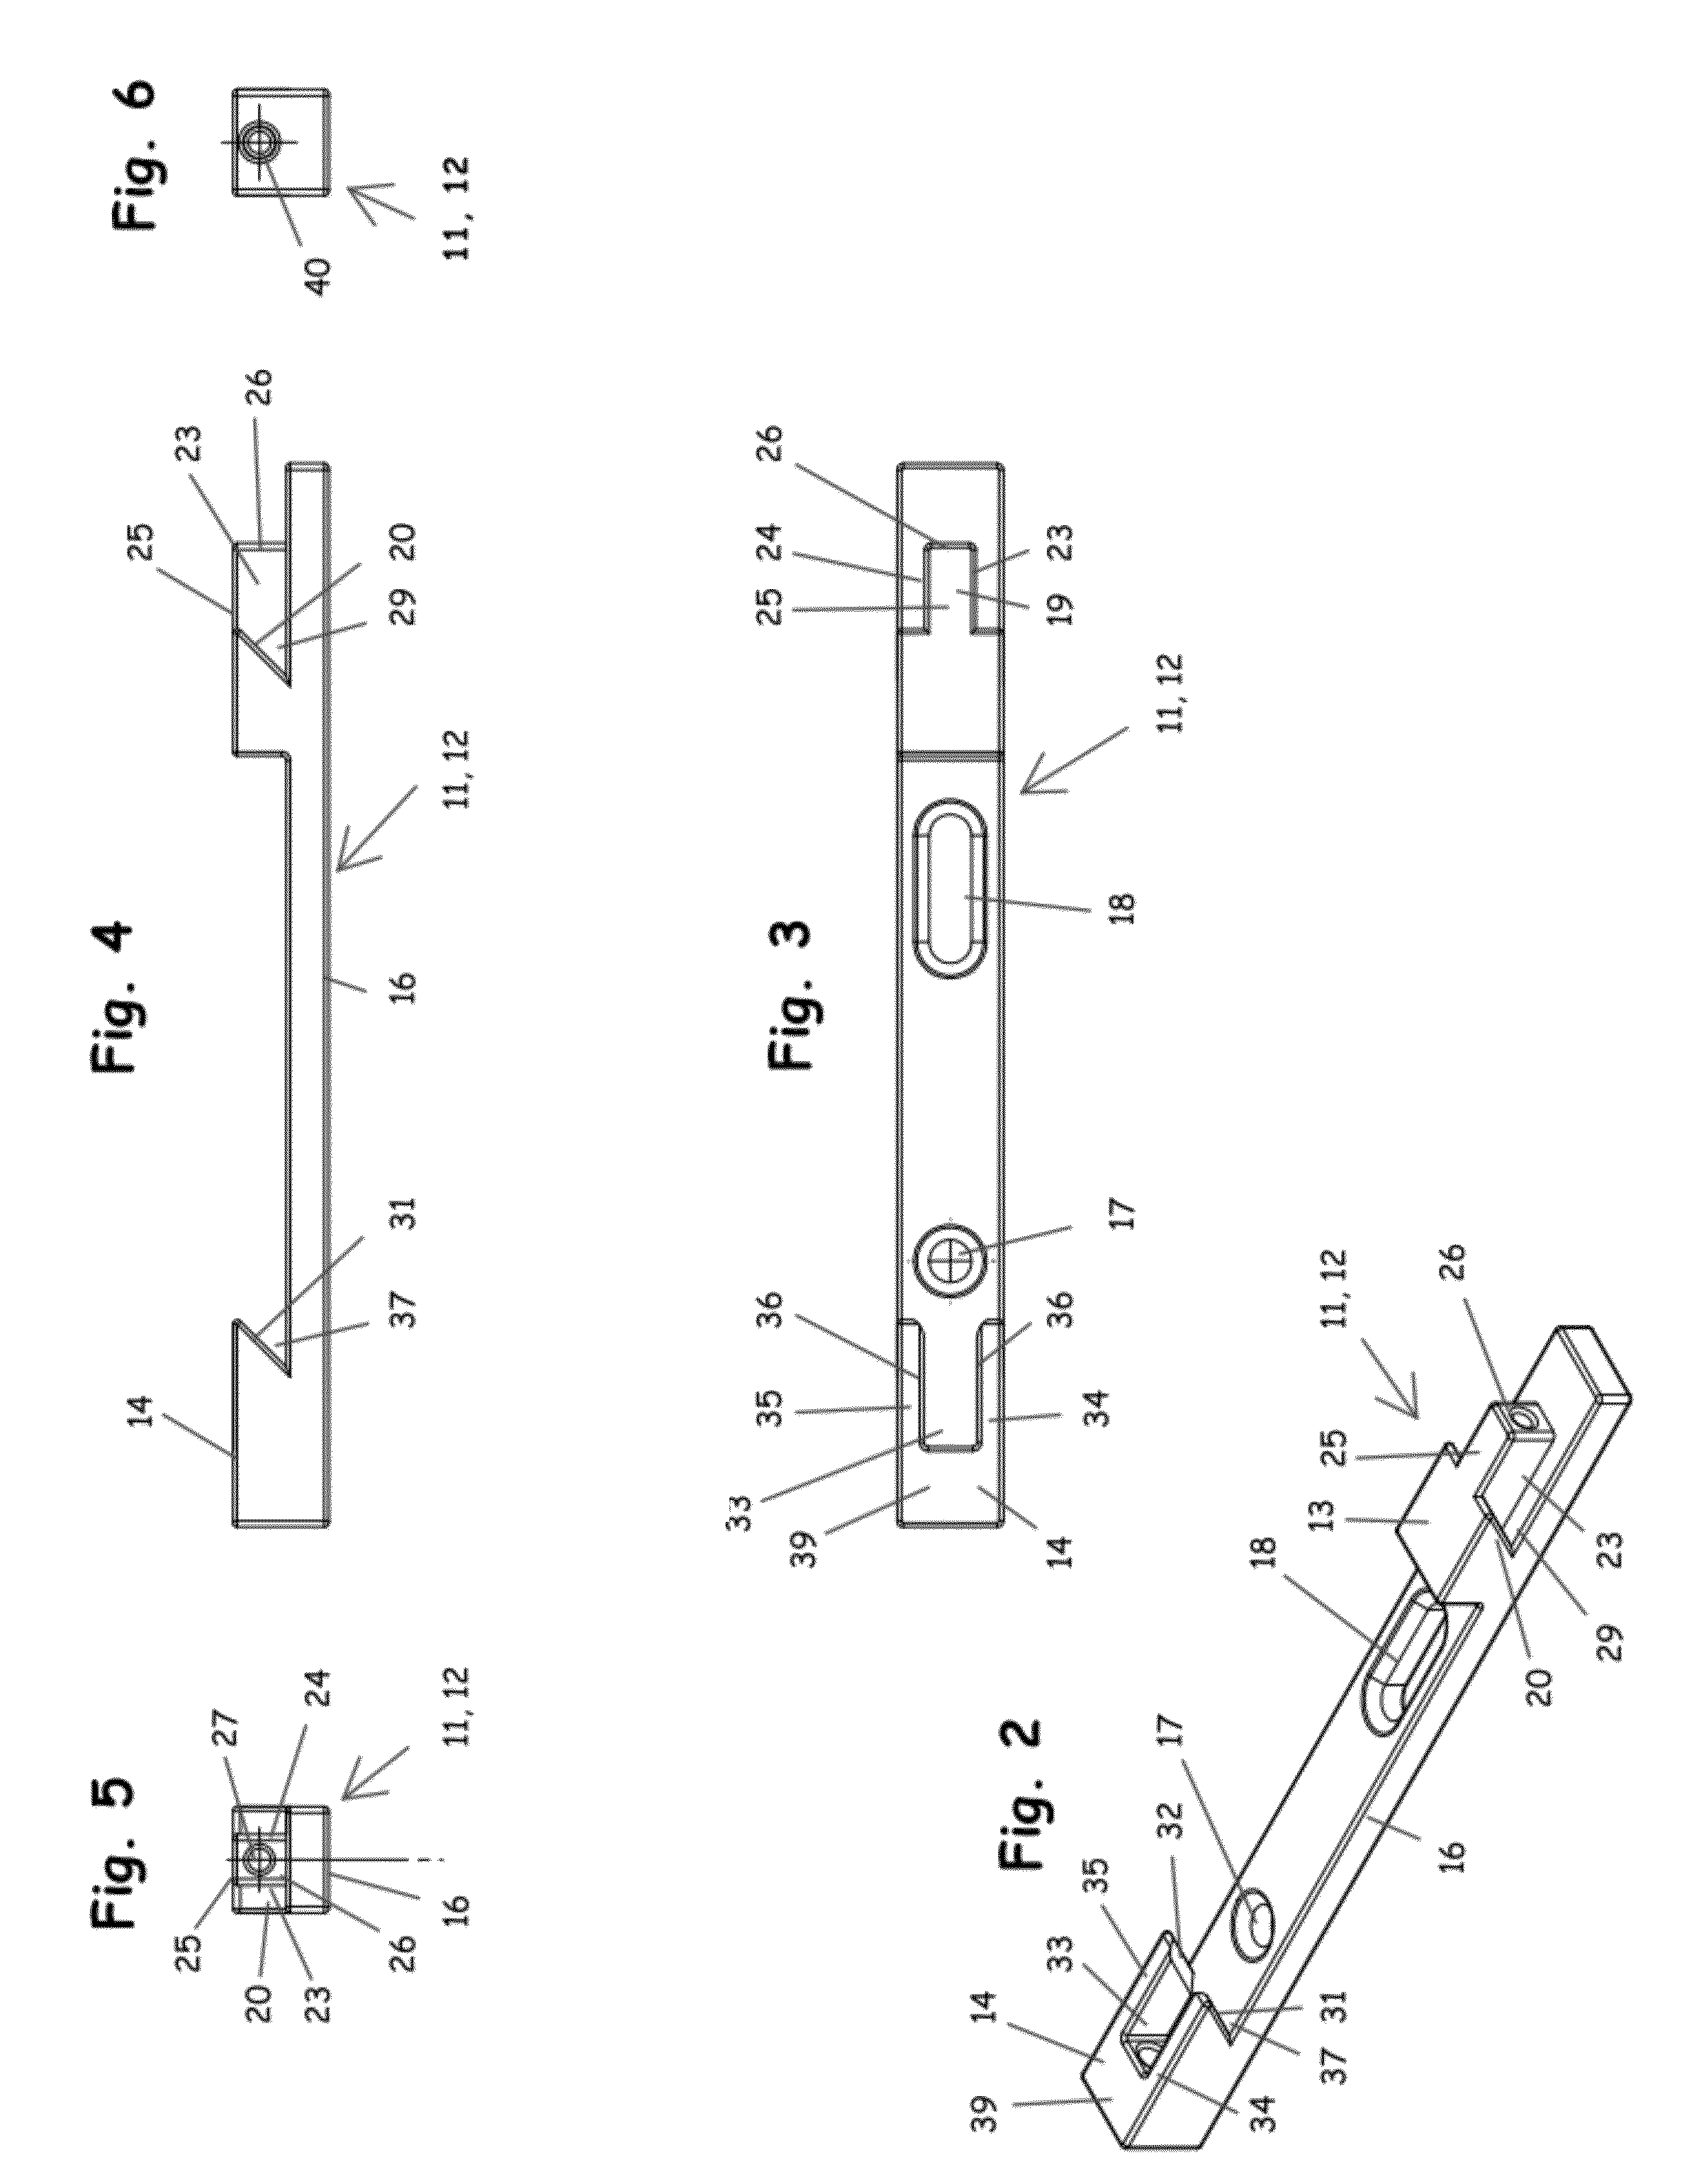 Interlocking connector system